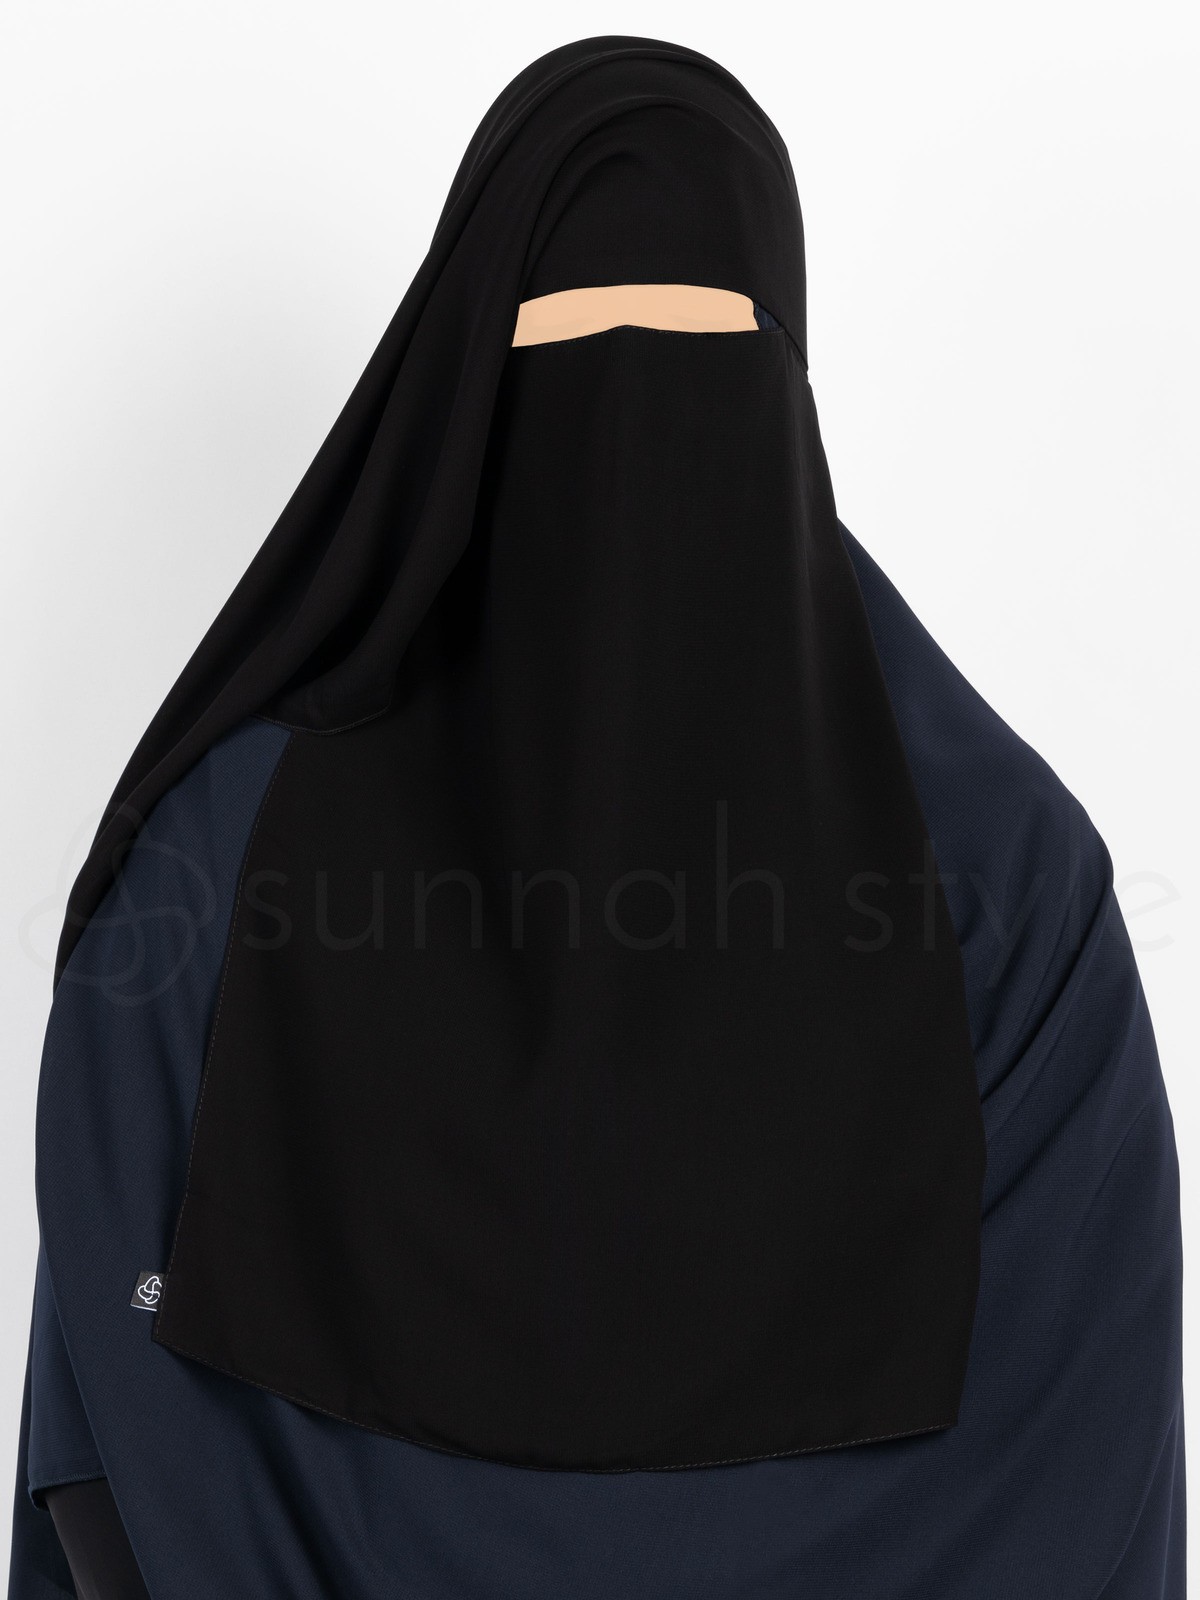 Sunnah Style - Three Layer Niqab (Navy Blue)